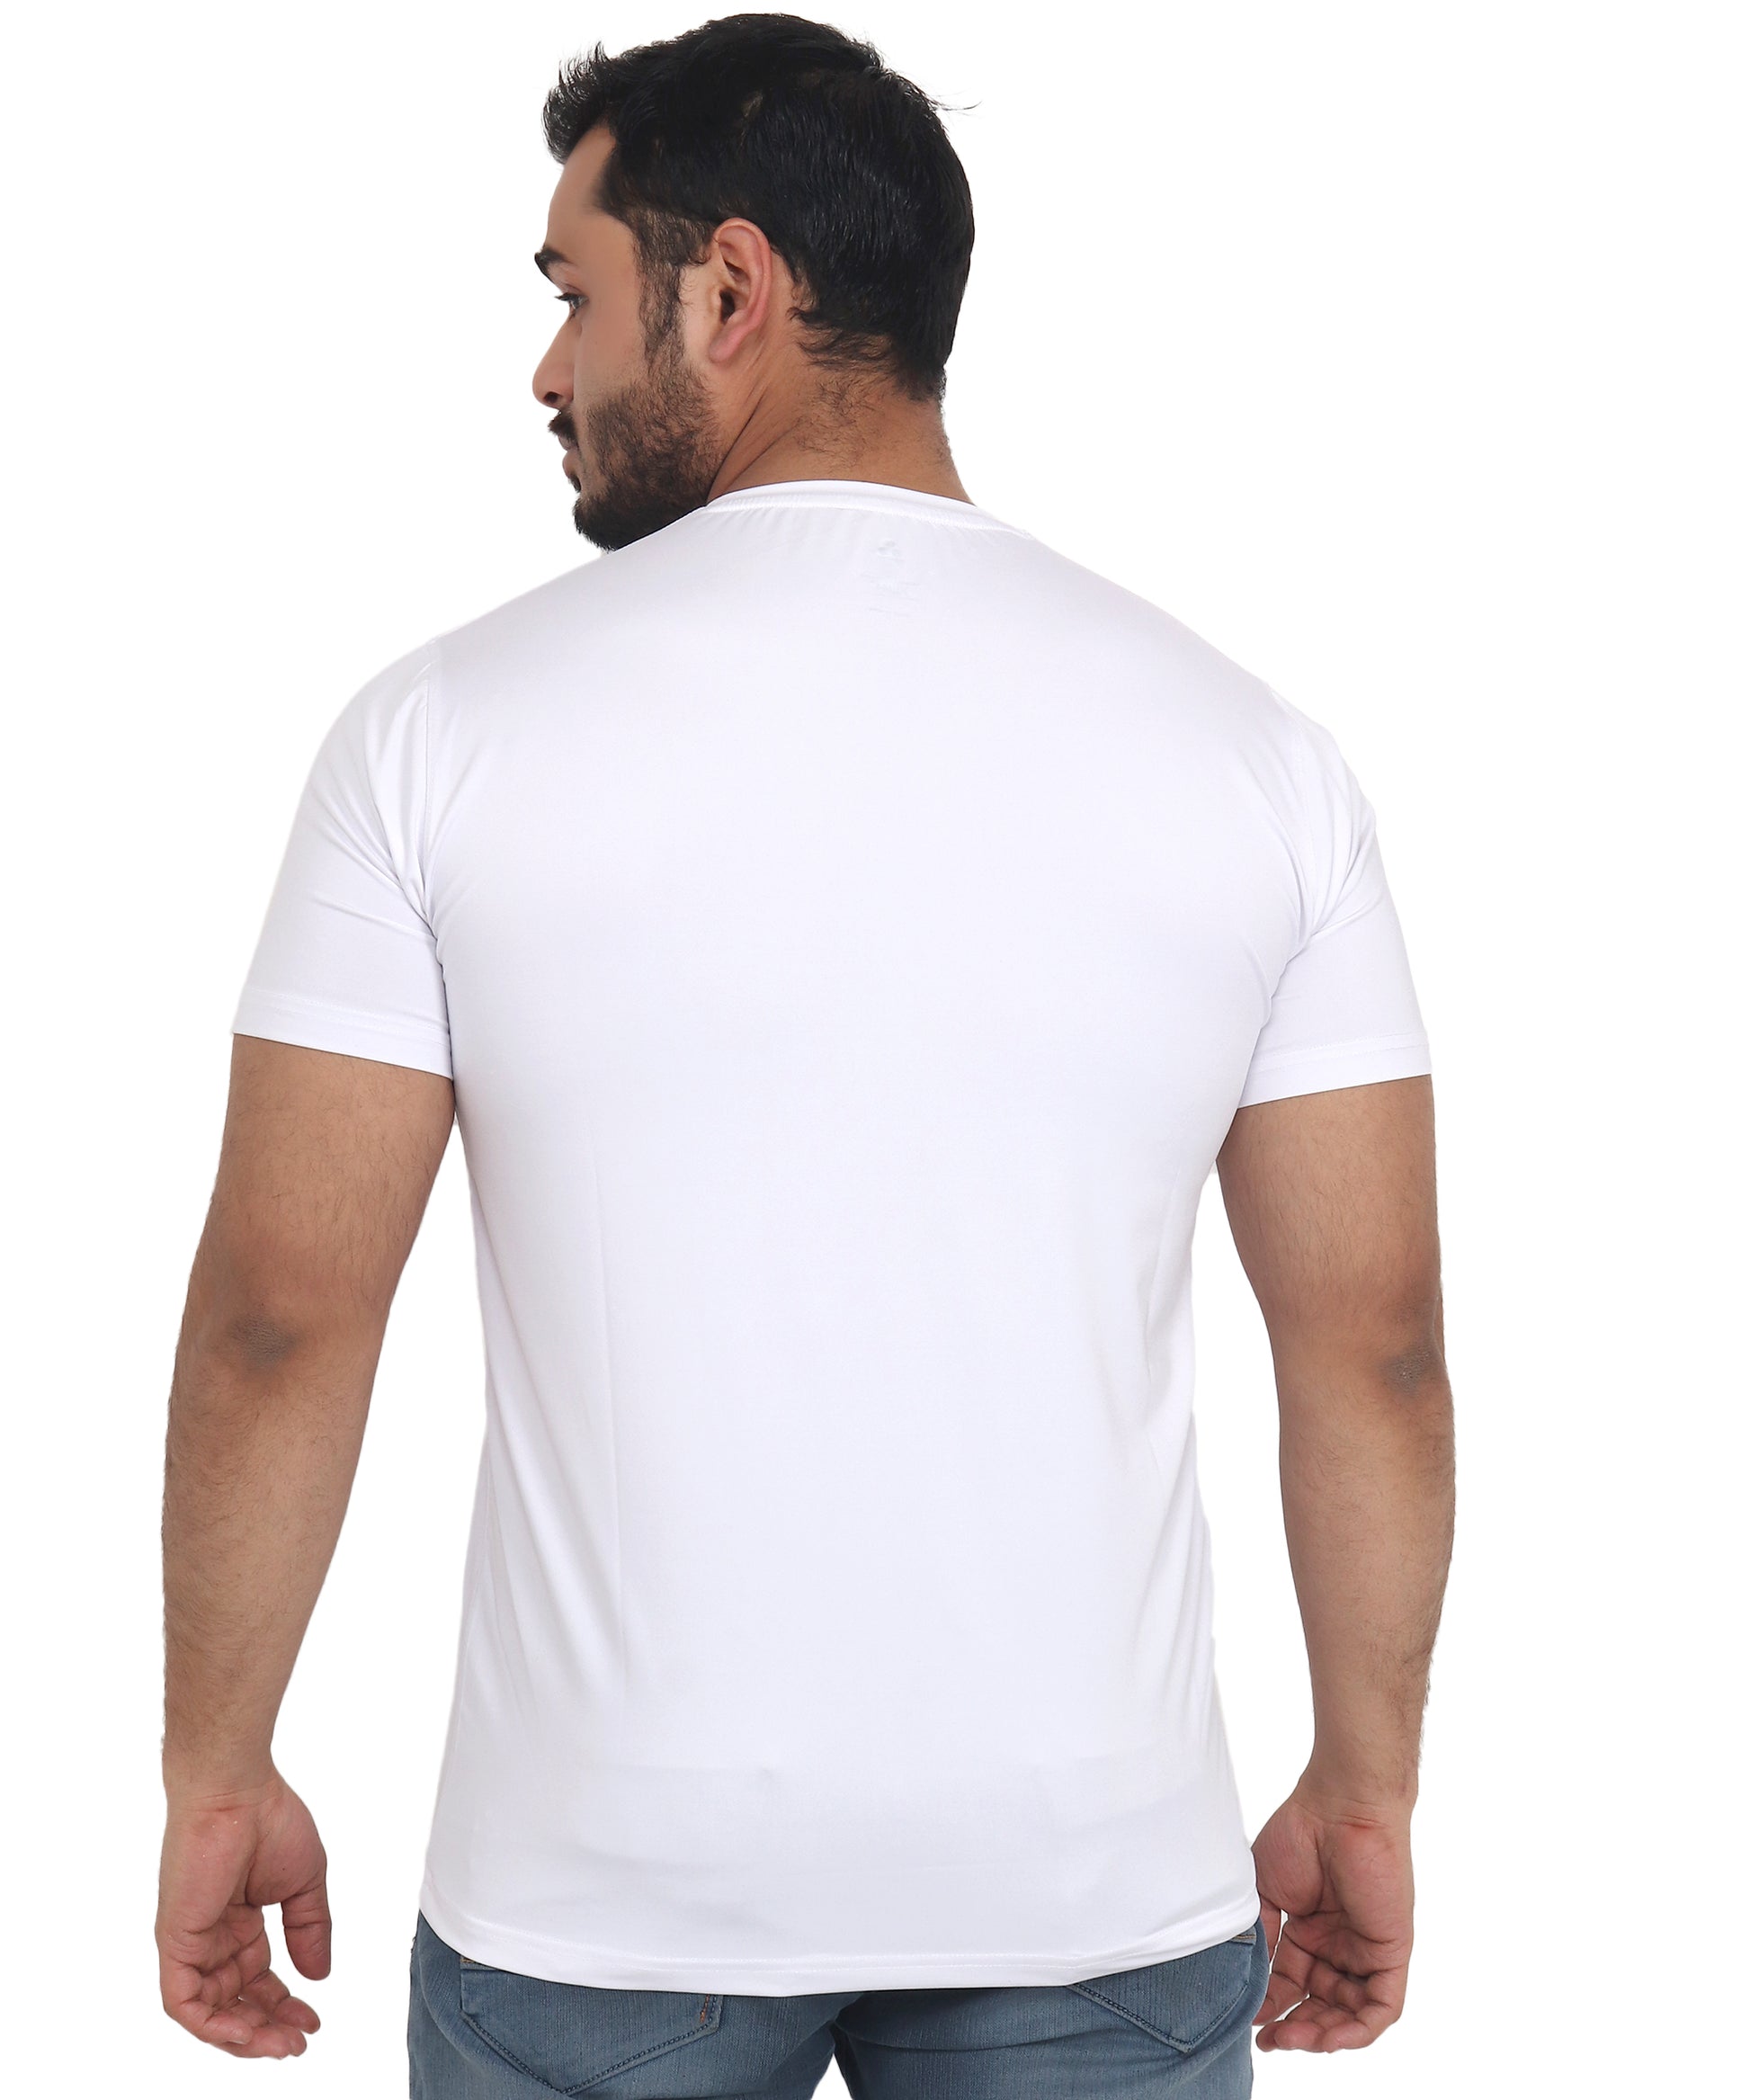 Triple Dot Men's Active Wear - Back View